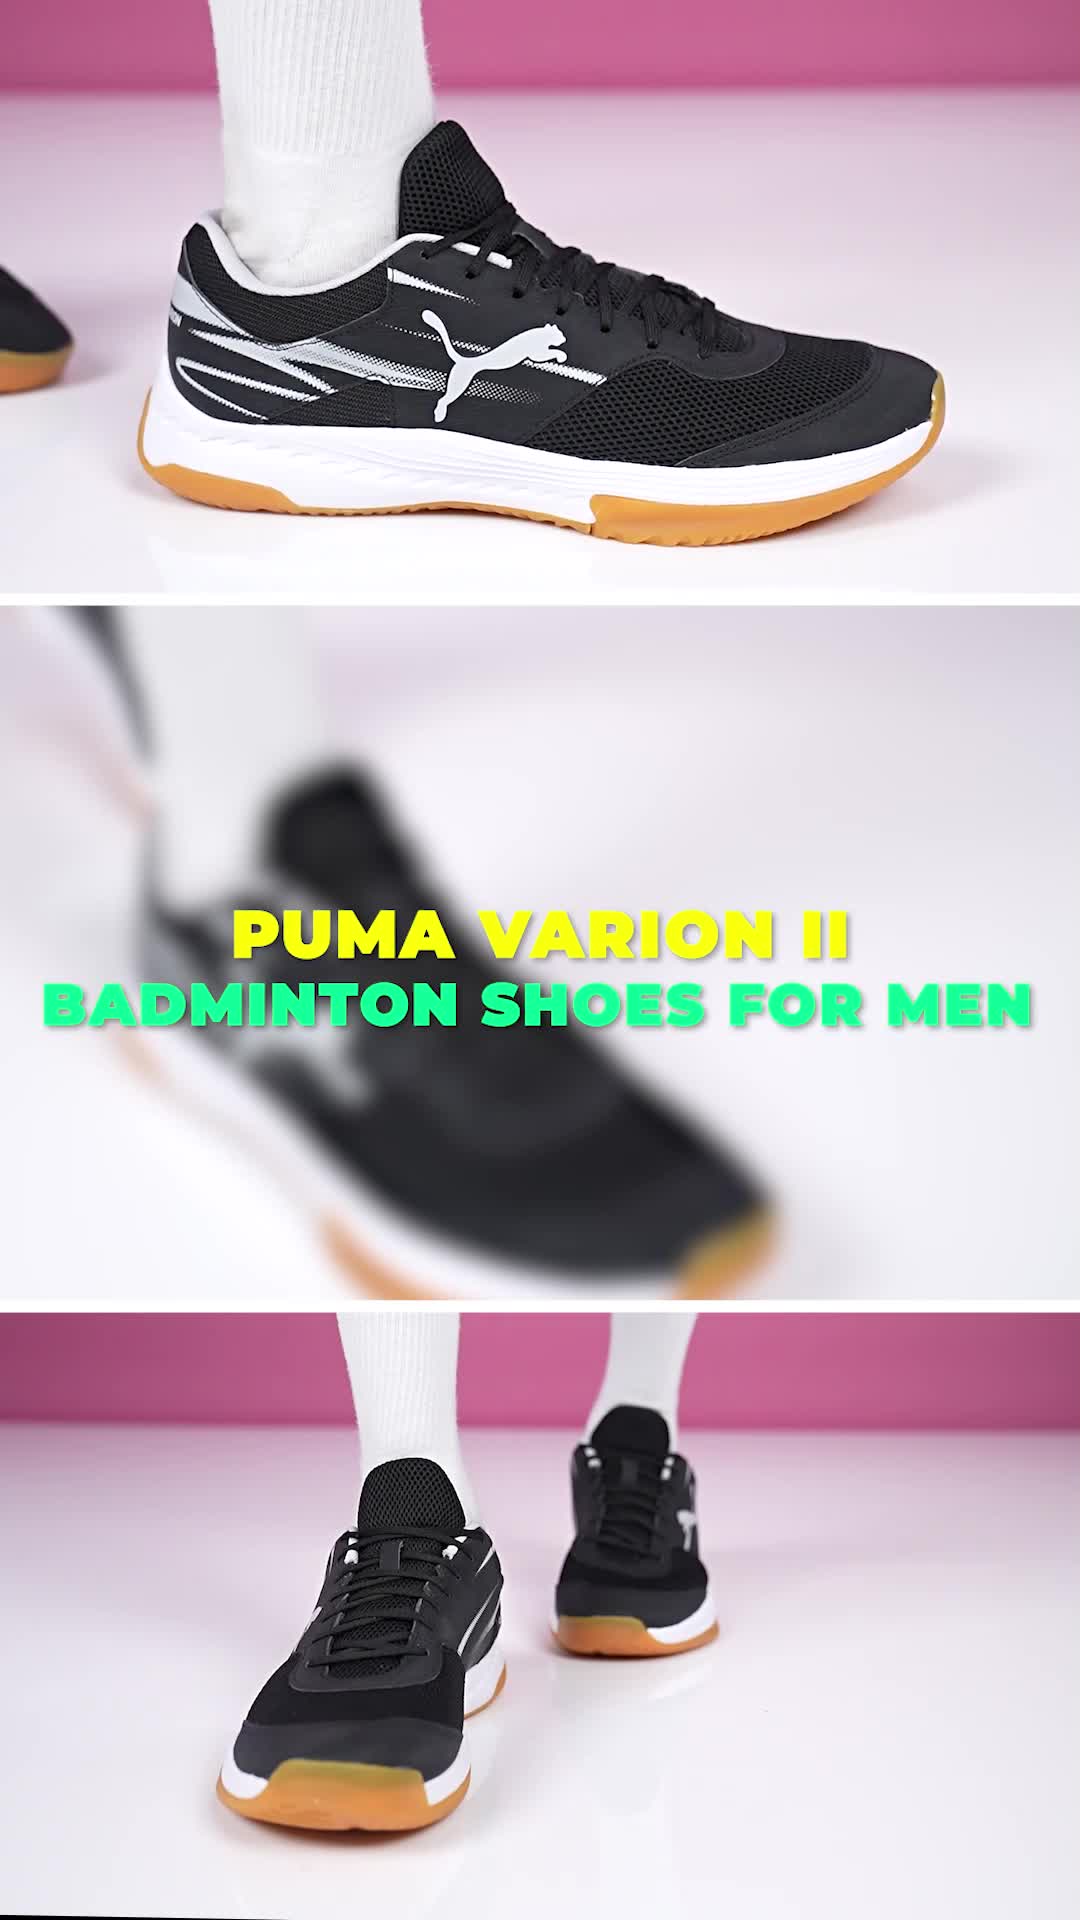 PUMA Varion II Varion - at Best India Men Online Shop Shoes Footwears Price Buy Badminton - Men For for For Badminton PUMA II Shoes Online in